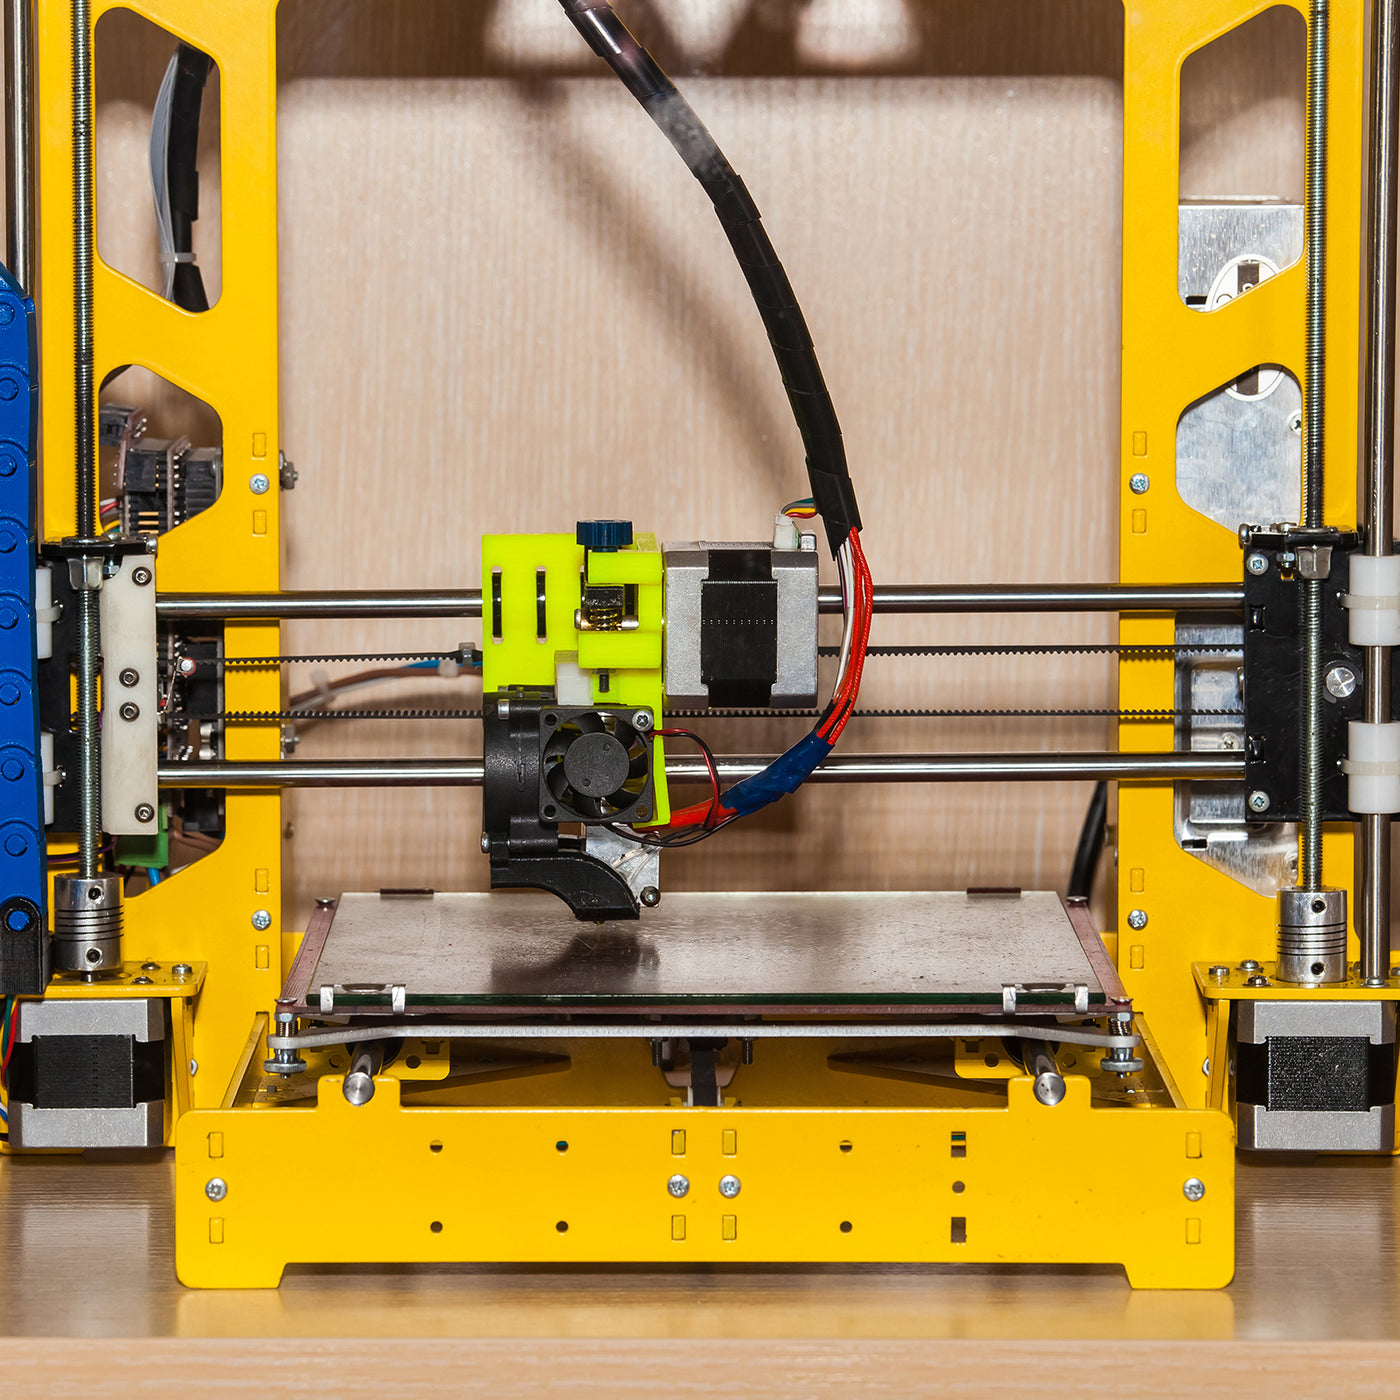 Harfington Timing Belts Pulley Aluminium Synchronous Wheel for 3D Printer Belt, CNC